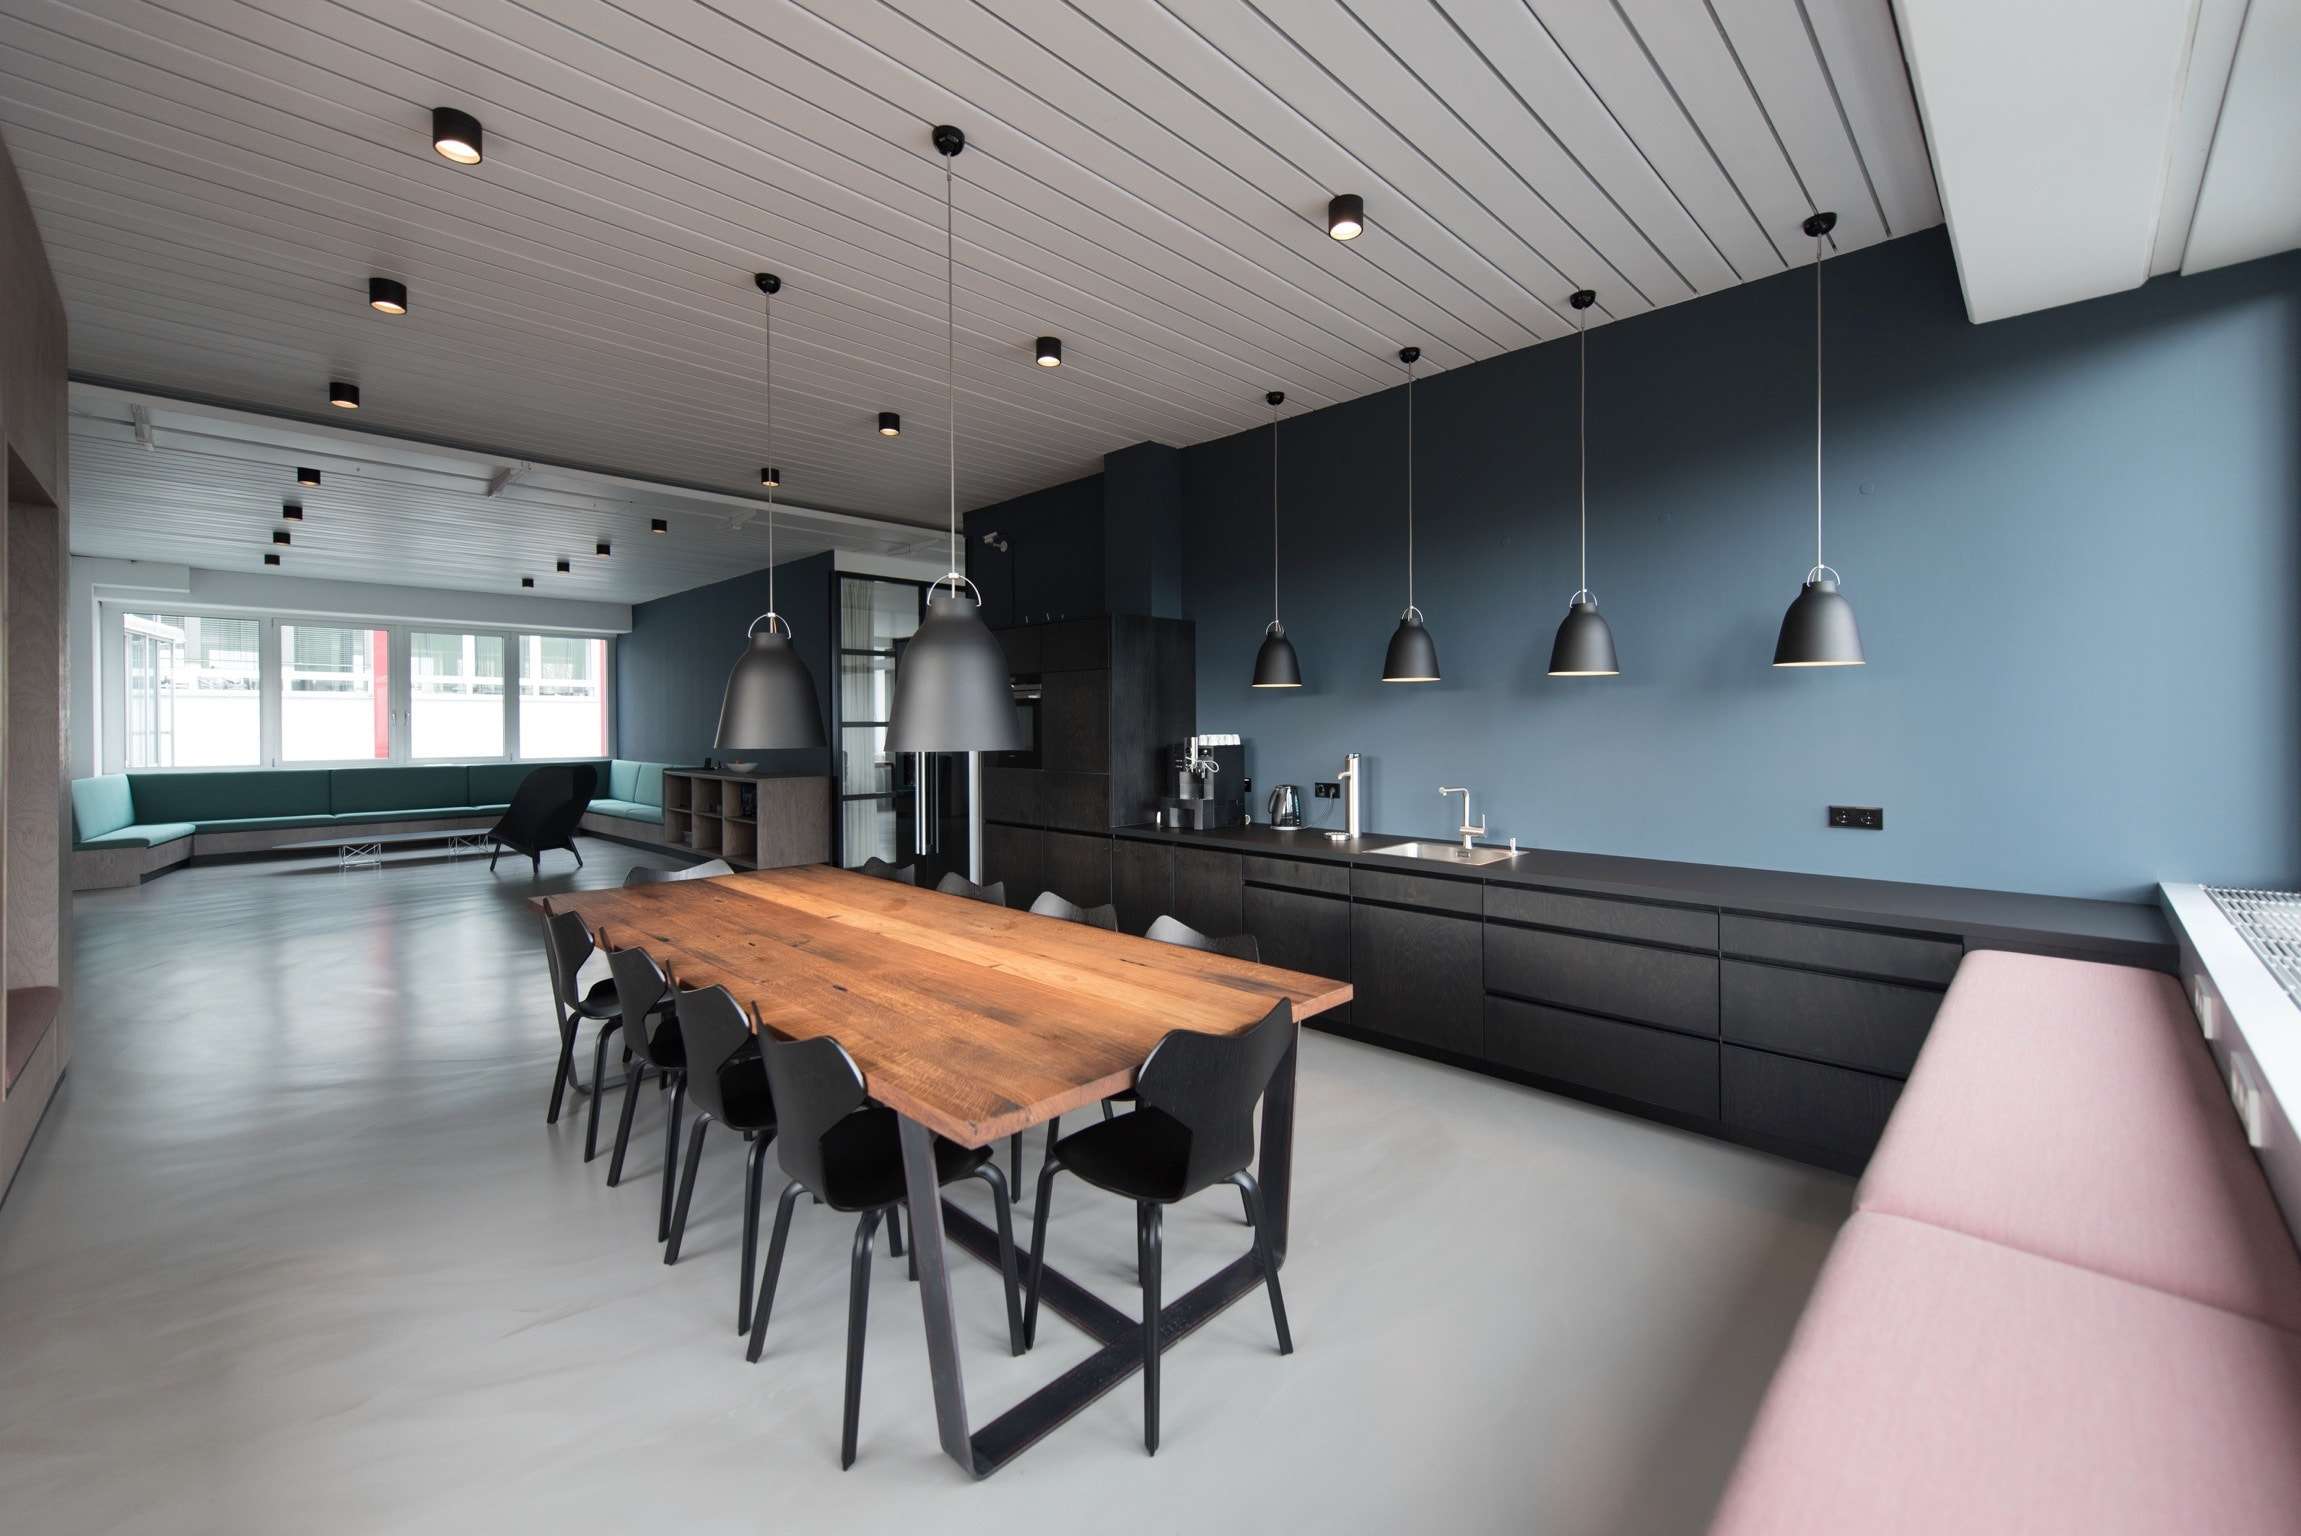 Large cafe style office kitchen